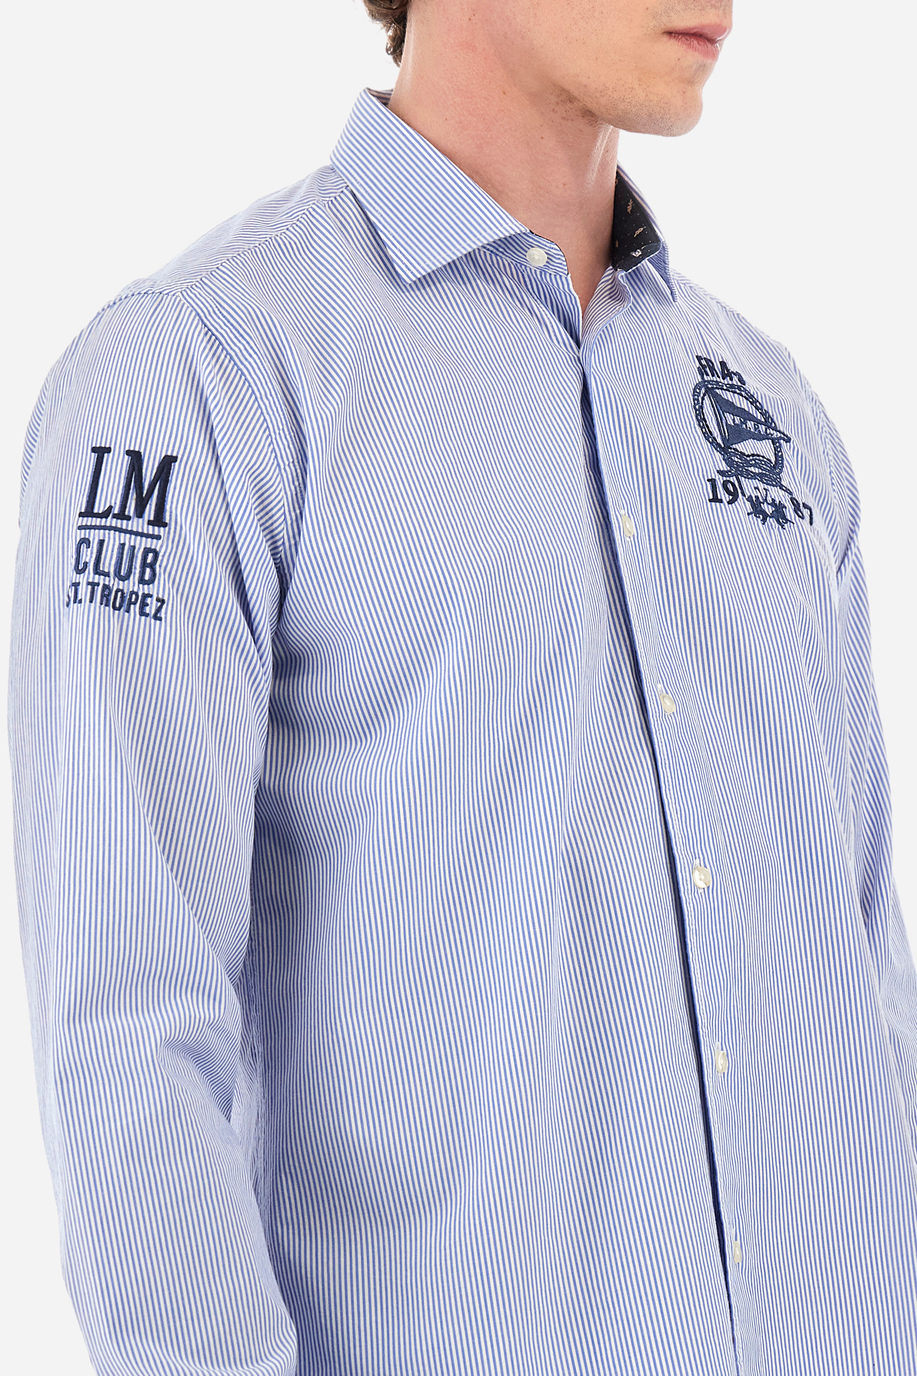 Poplin shirt with a striped pattern - Innocent - Shirts | La Martina - Official Online Shop